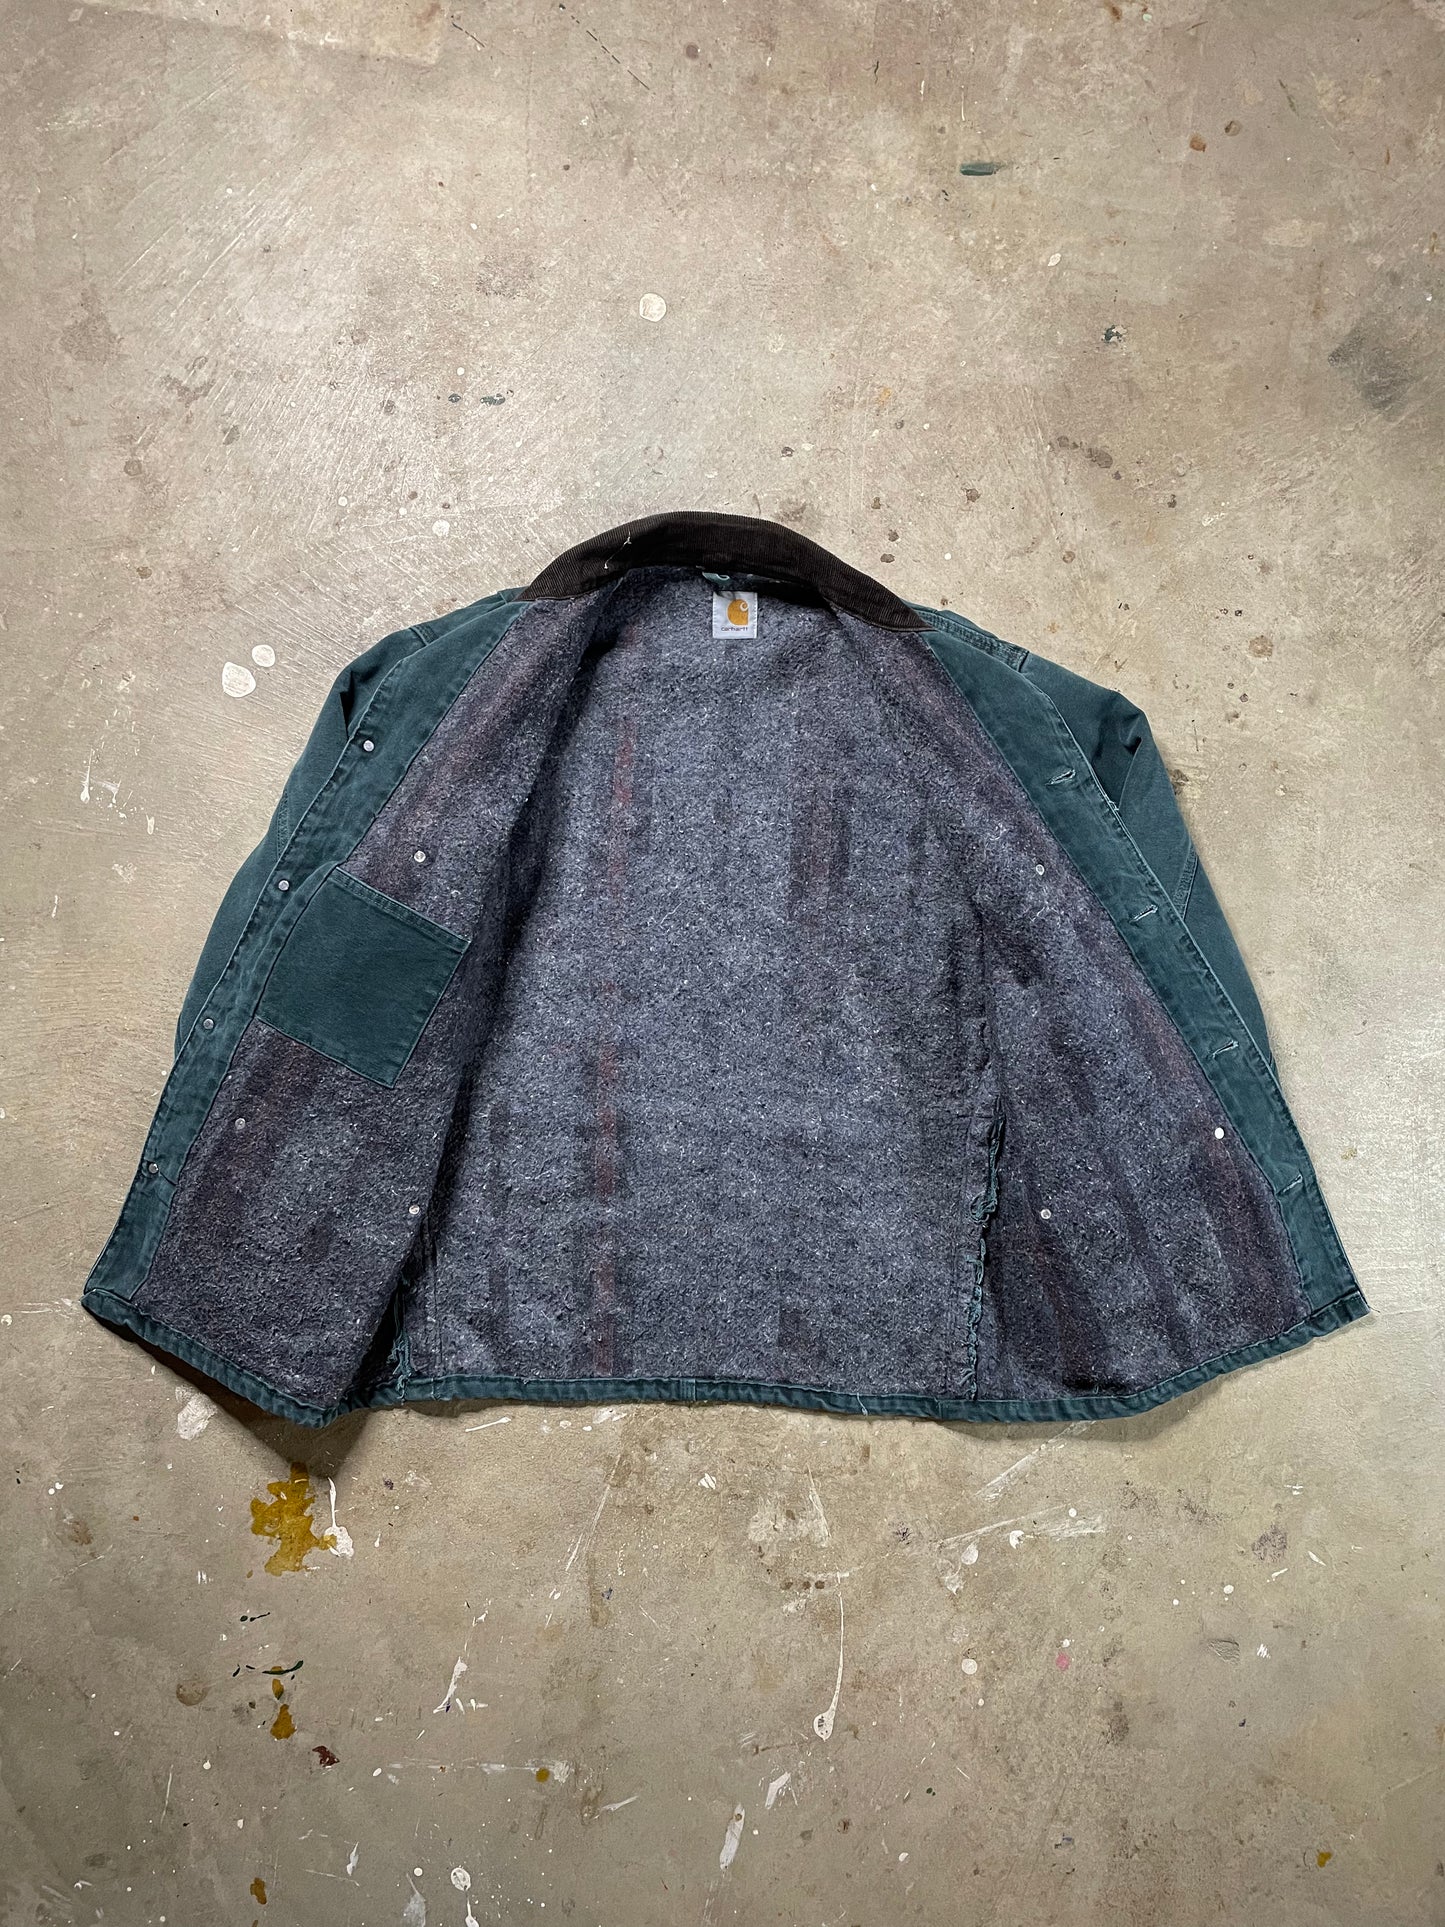 Vintage Carhartt Chore Jacket